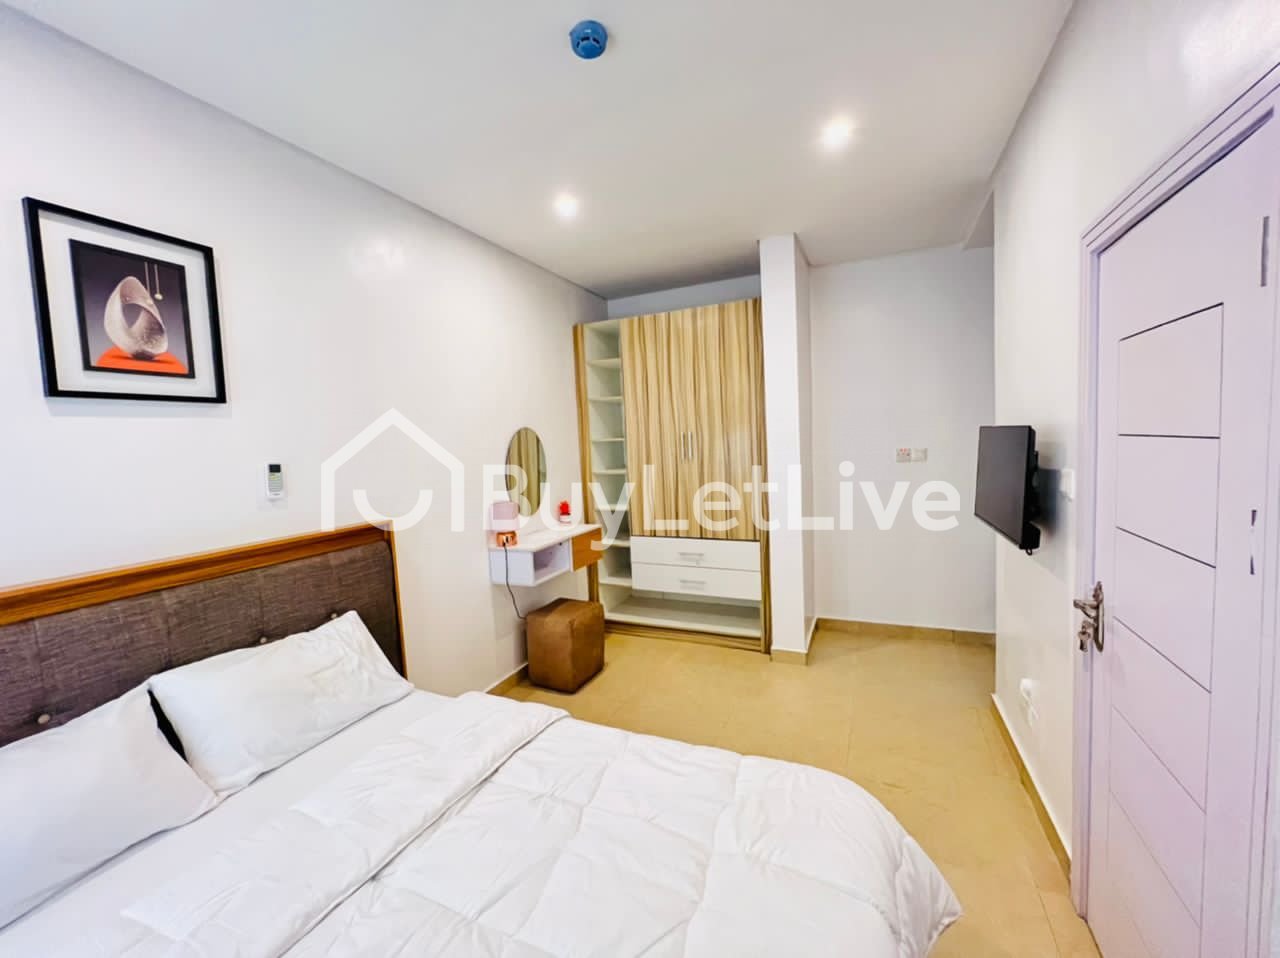 4 bedrooms Flat / Apartment for shortlet at Lekki Phase 1